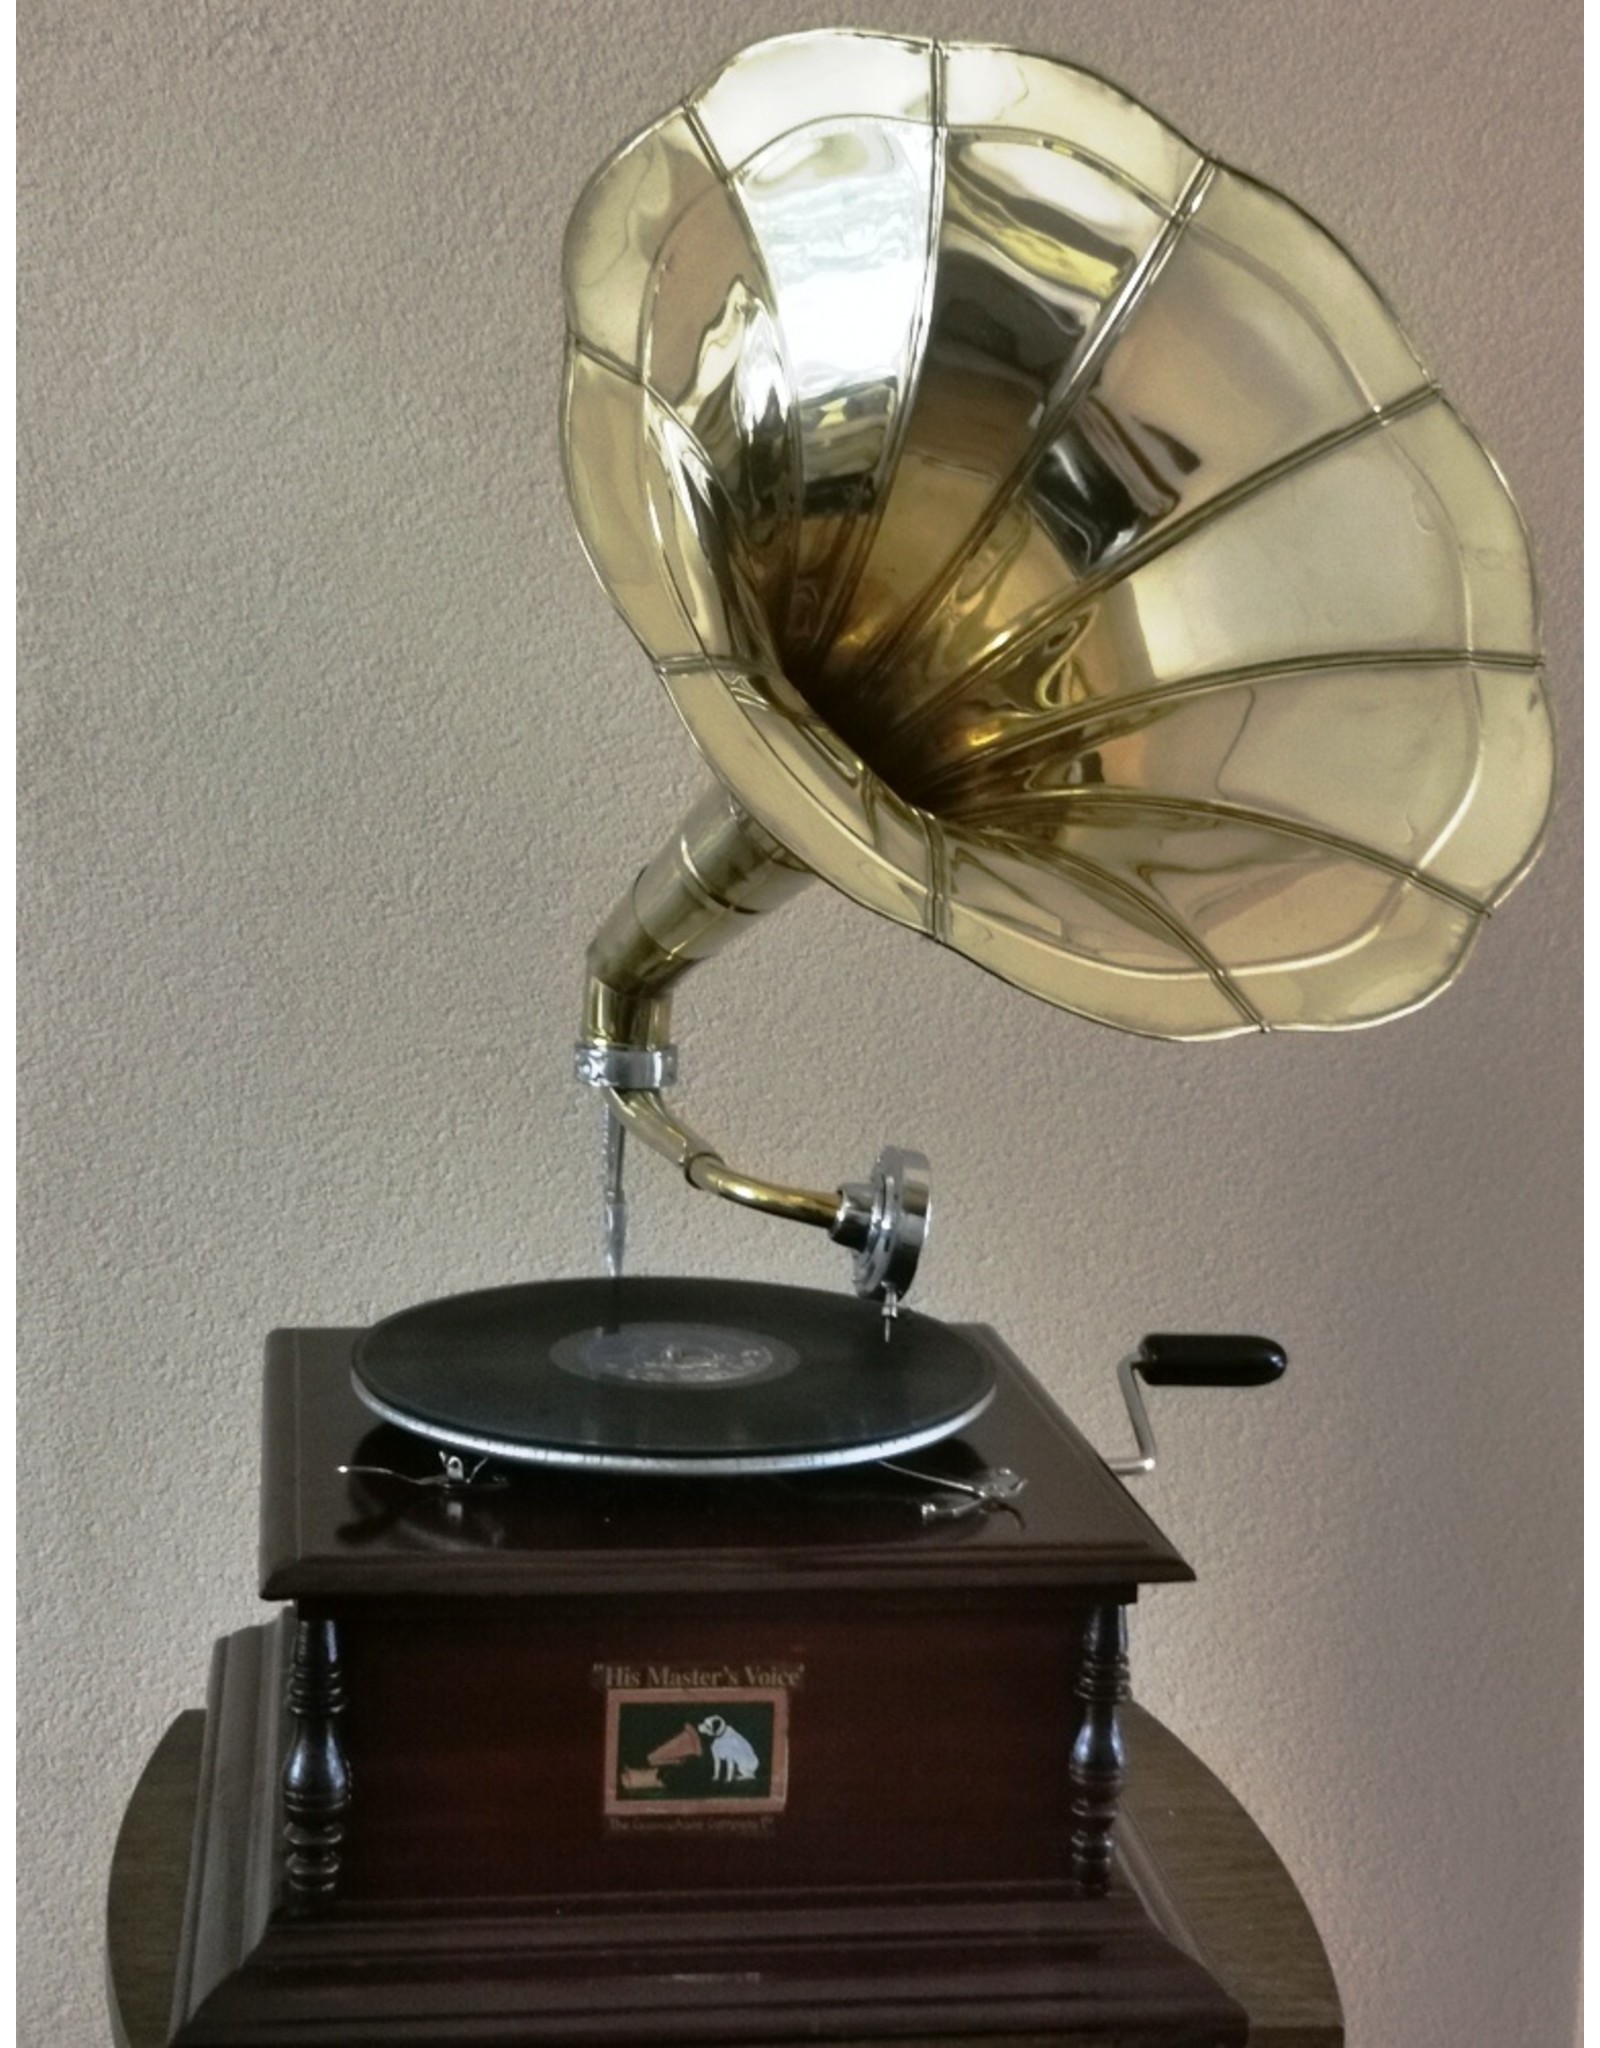 Grammofoon Miscellaneous - Grammofoon - Ouderwetse platenspeler met hoorn